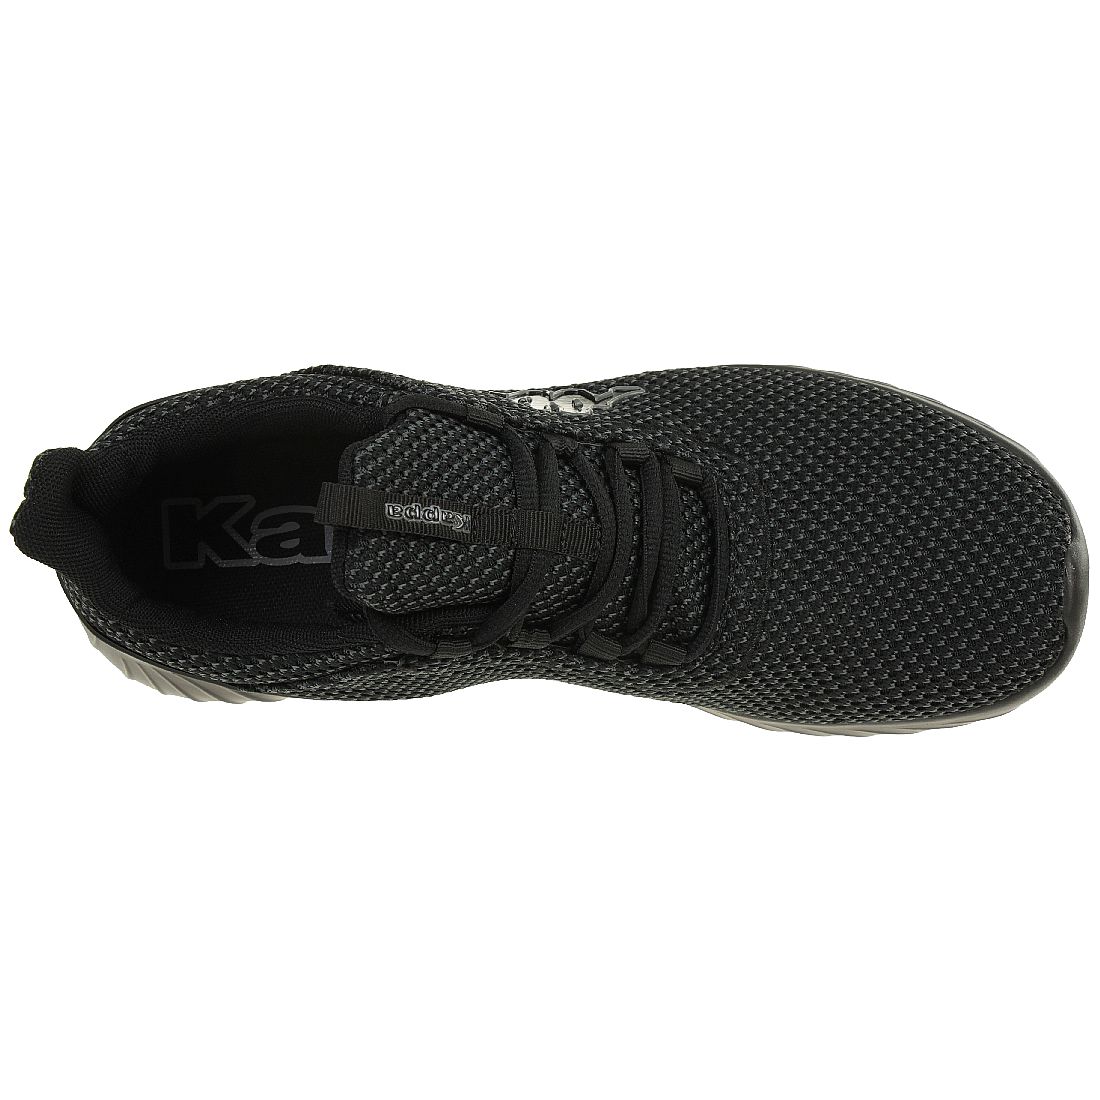 Kappa Sneaker Unisex Turnschuhe Schuhe schwarz 242684